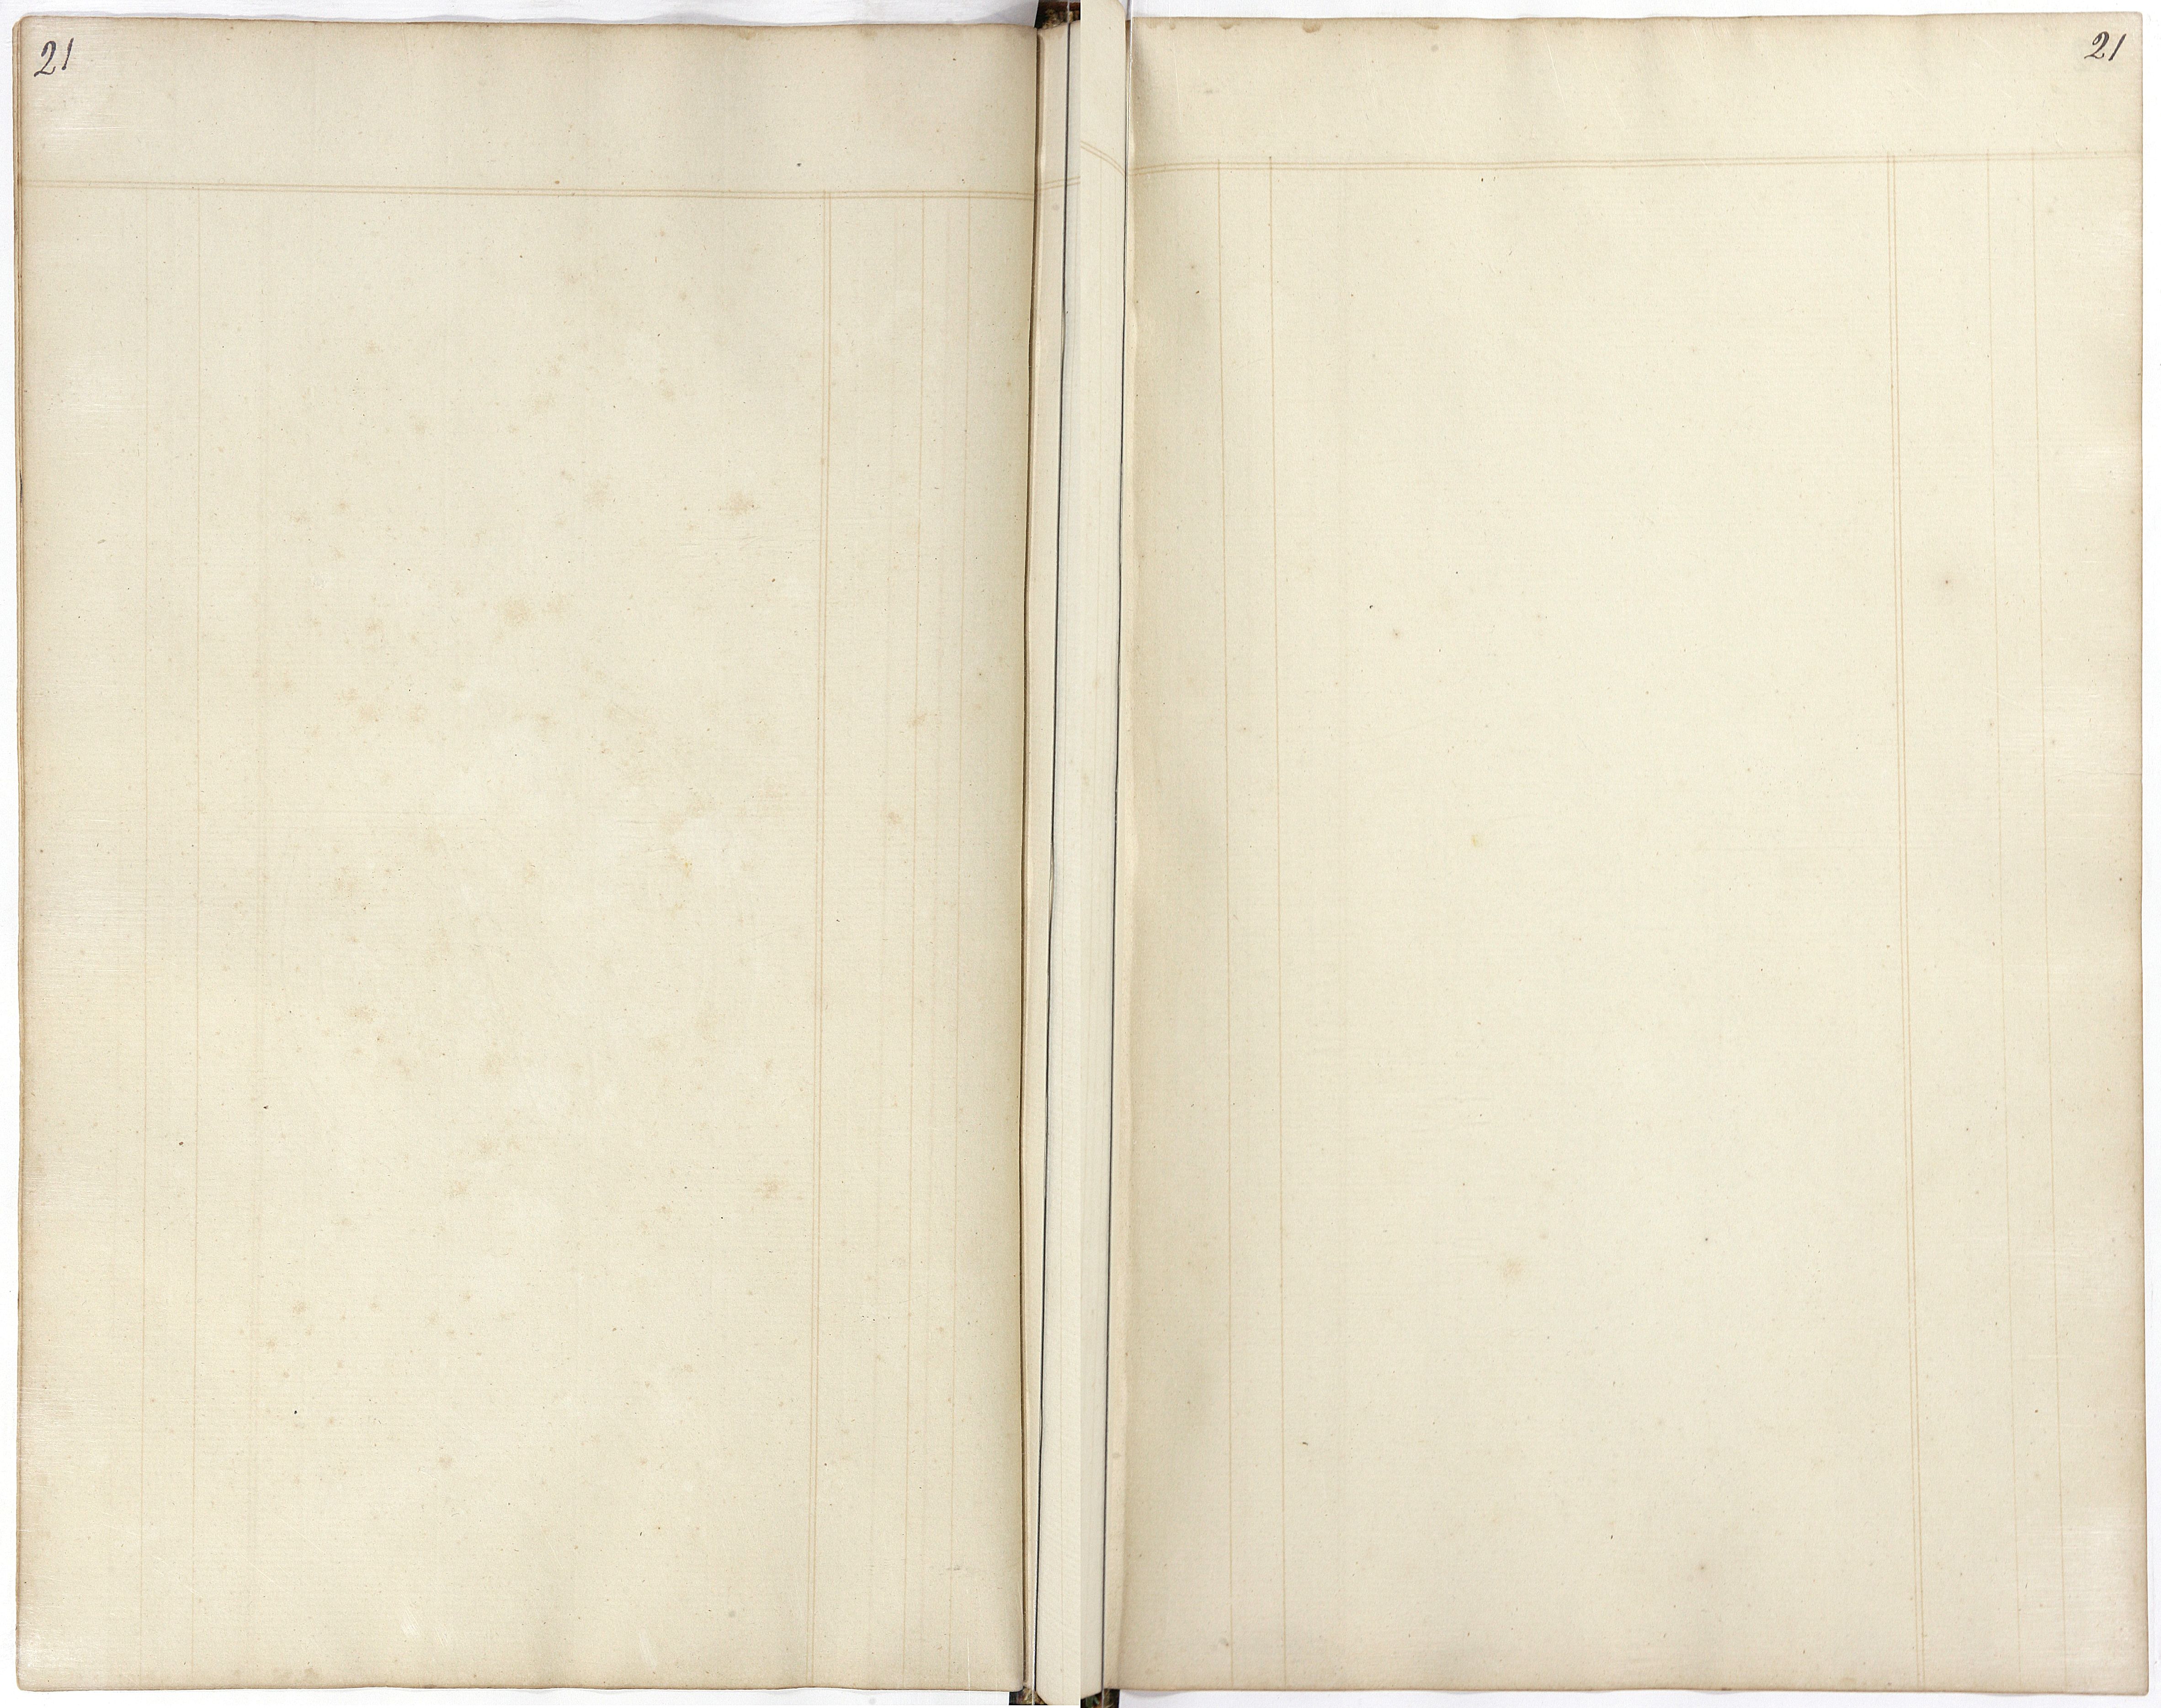 Image of Folio 21 (transcription below)